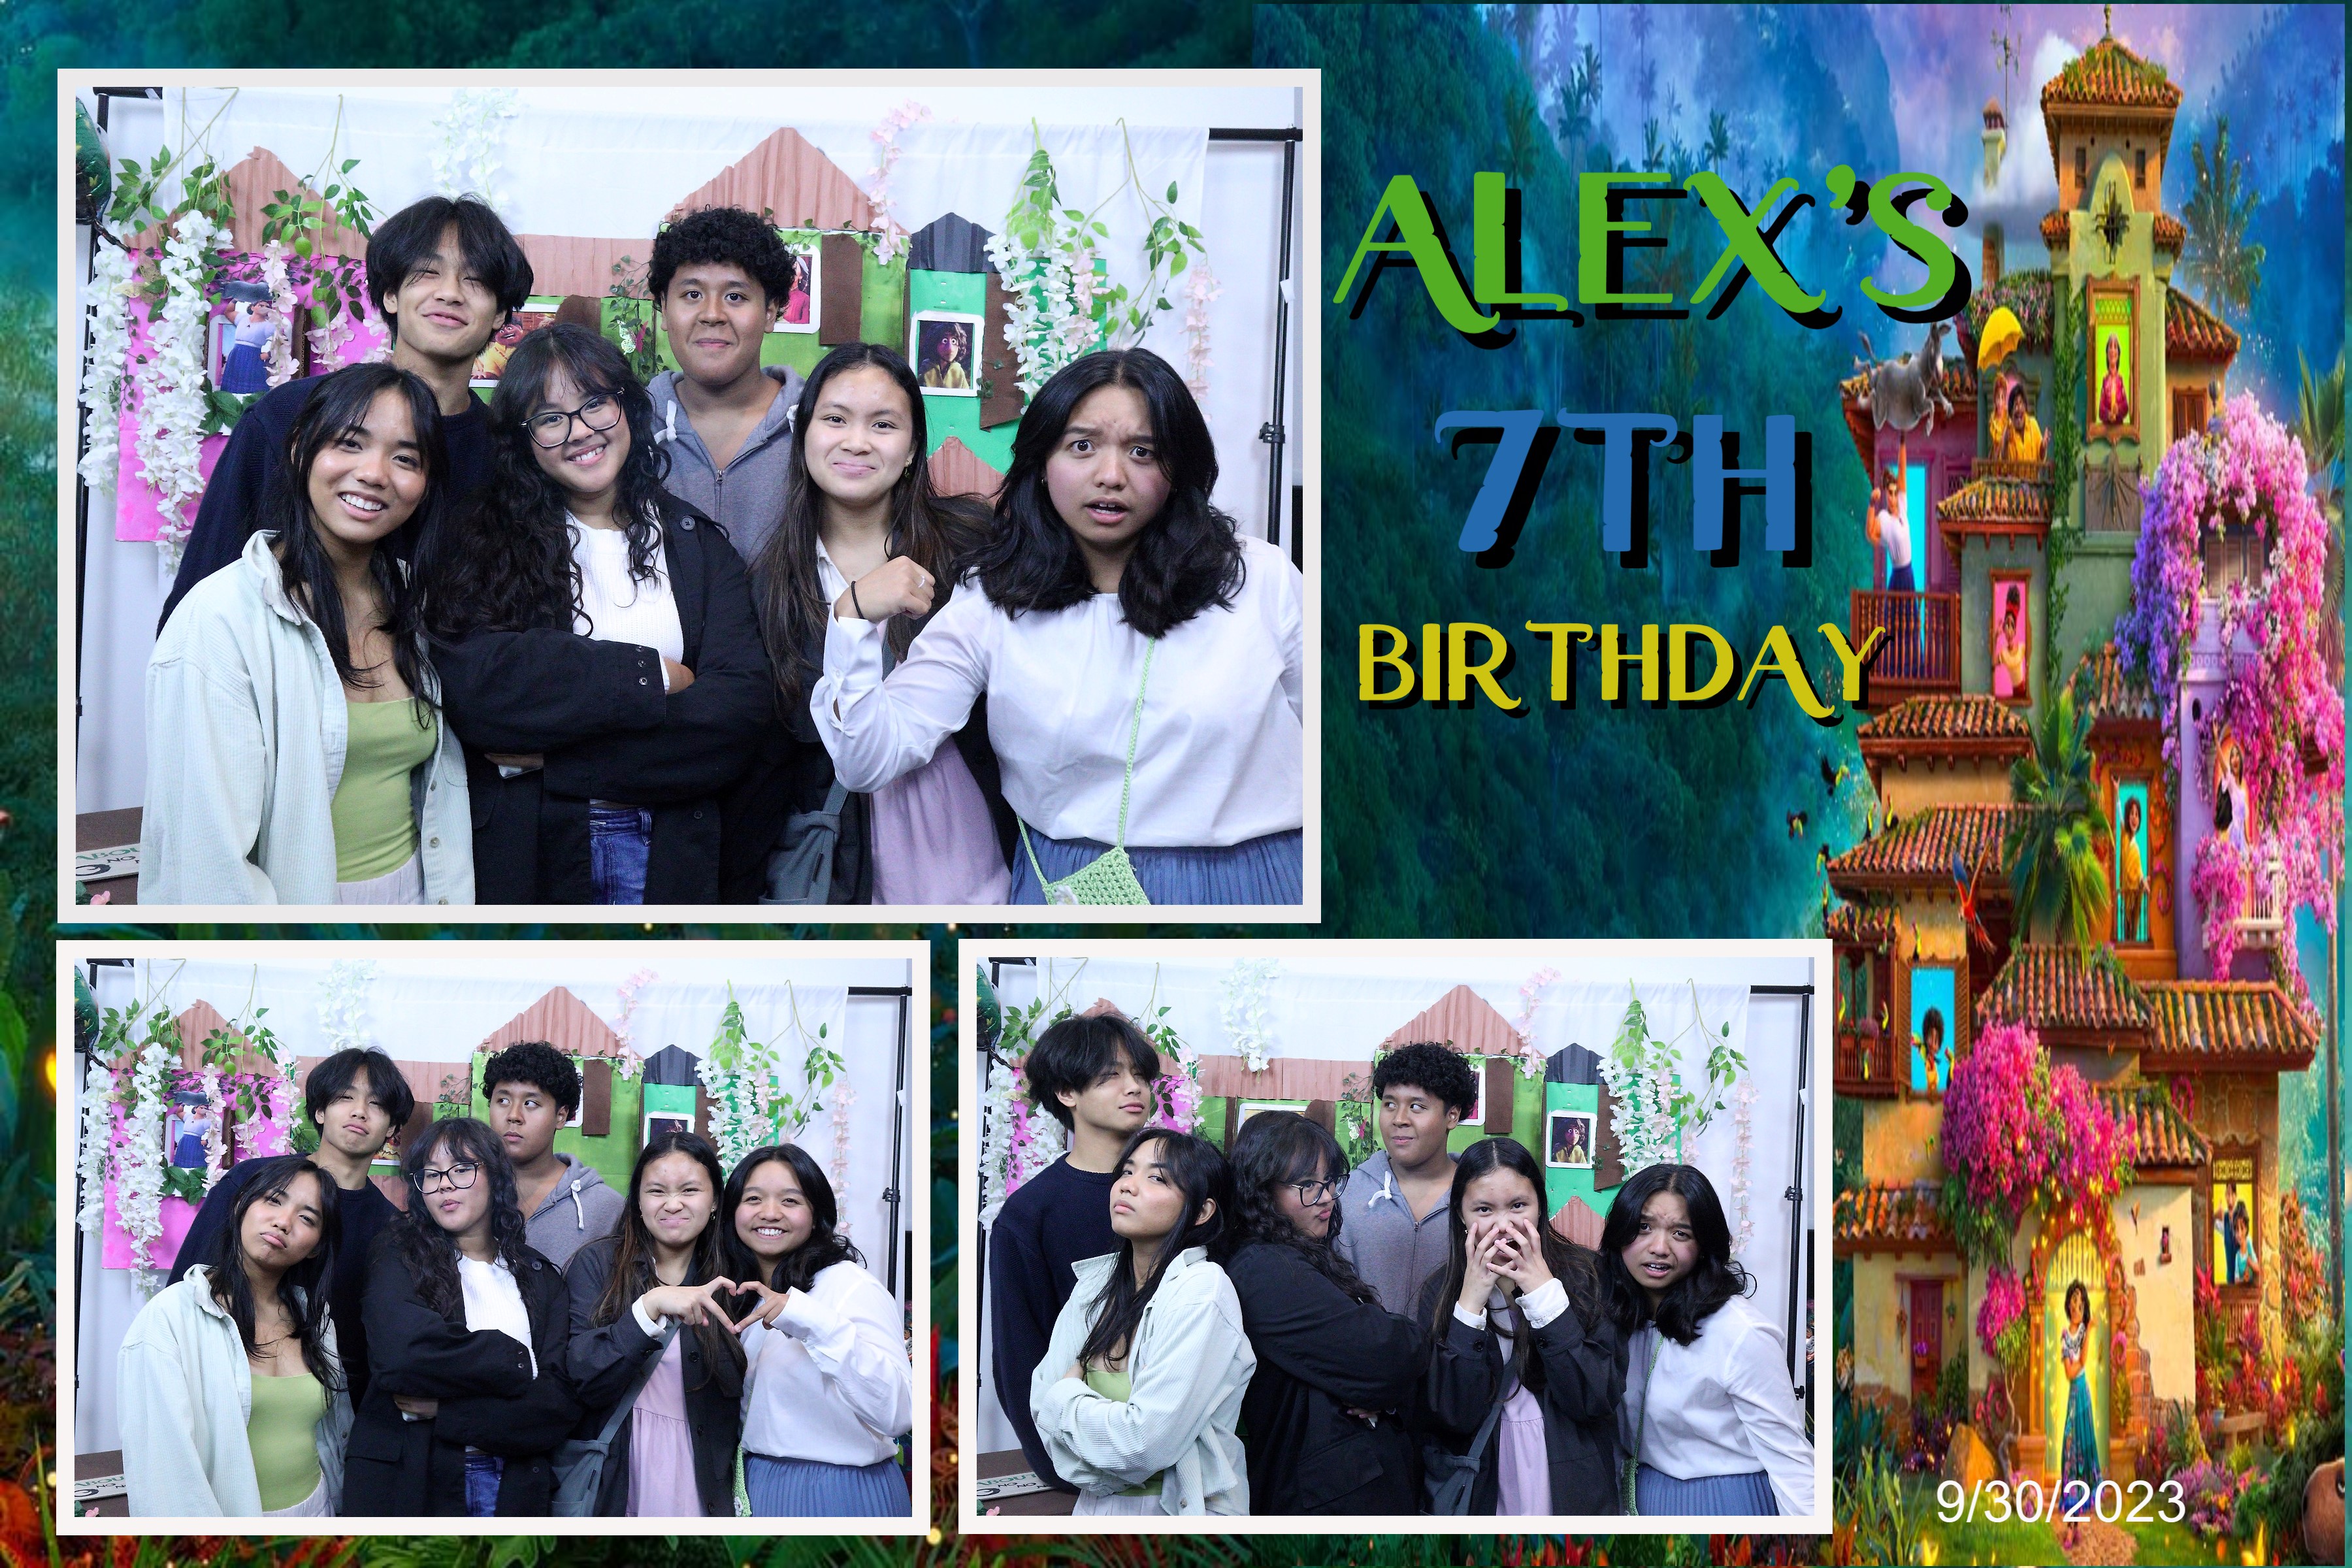 Alex's Encanto Themed Bday Party